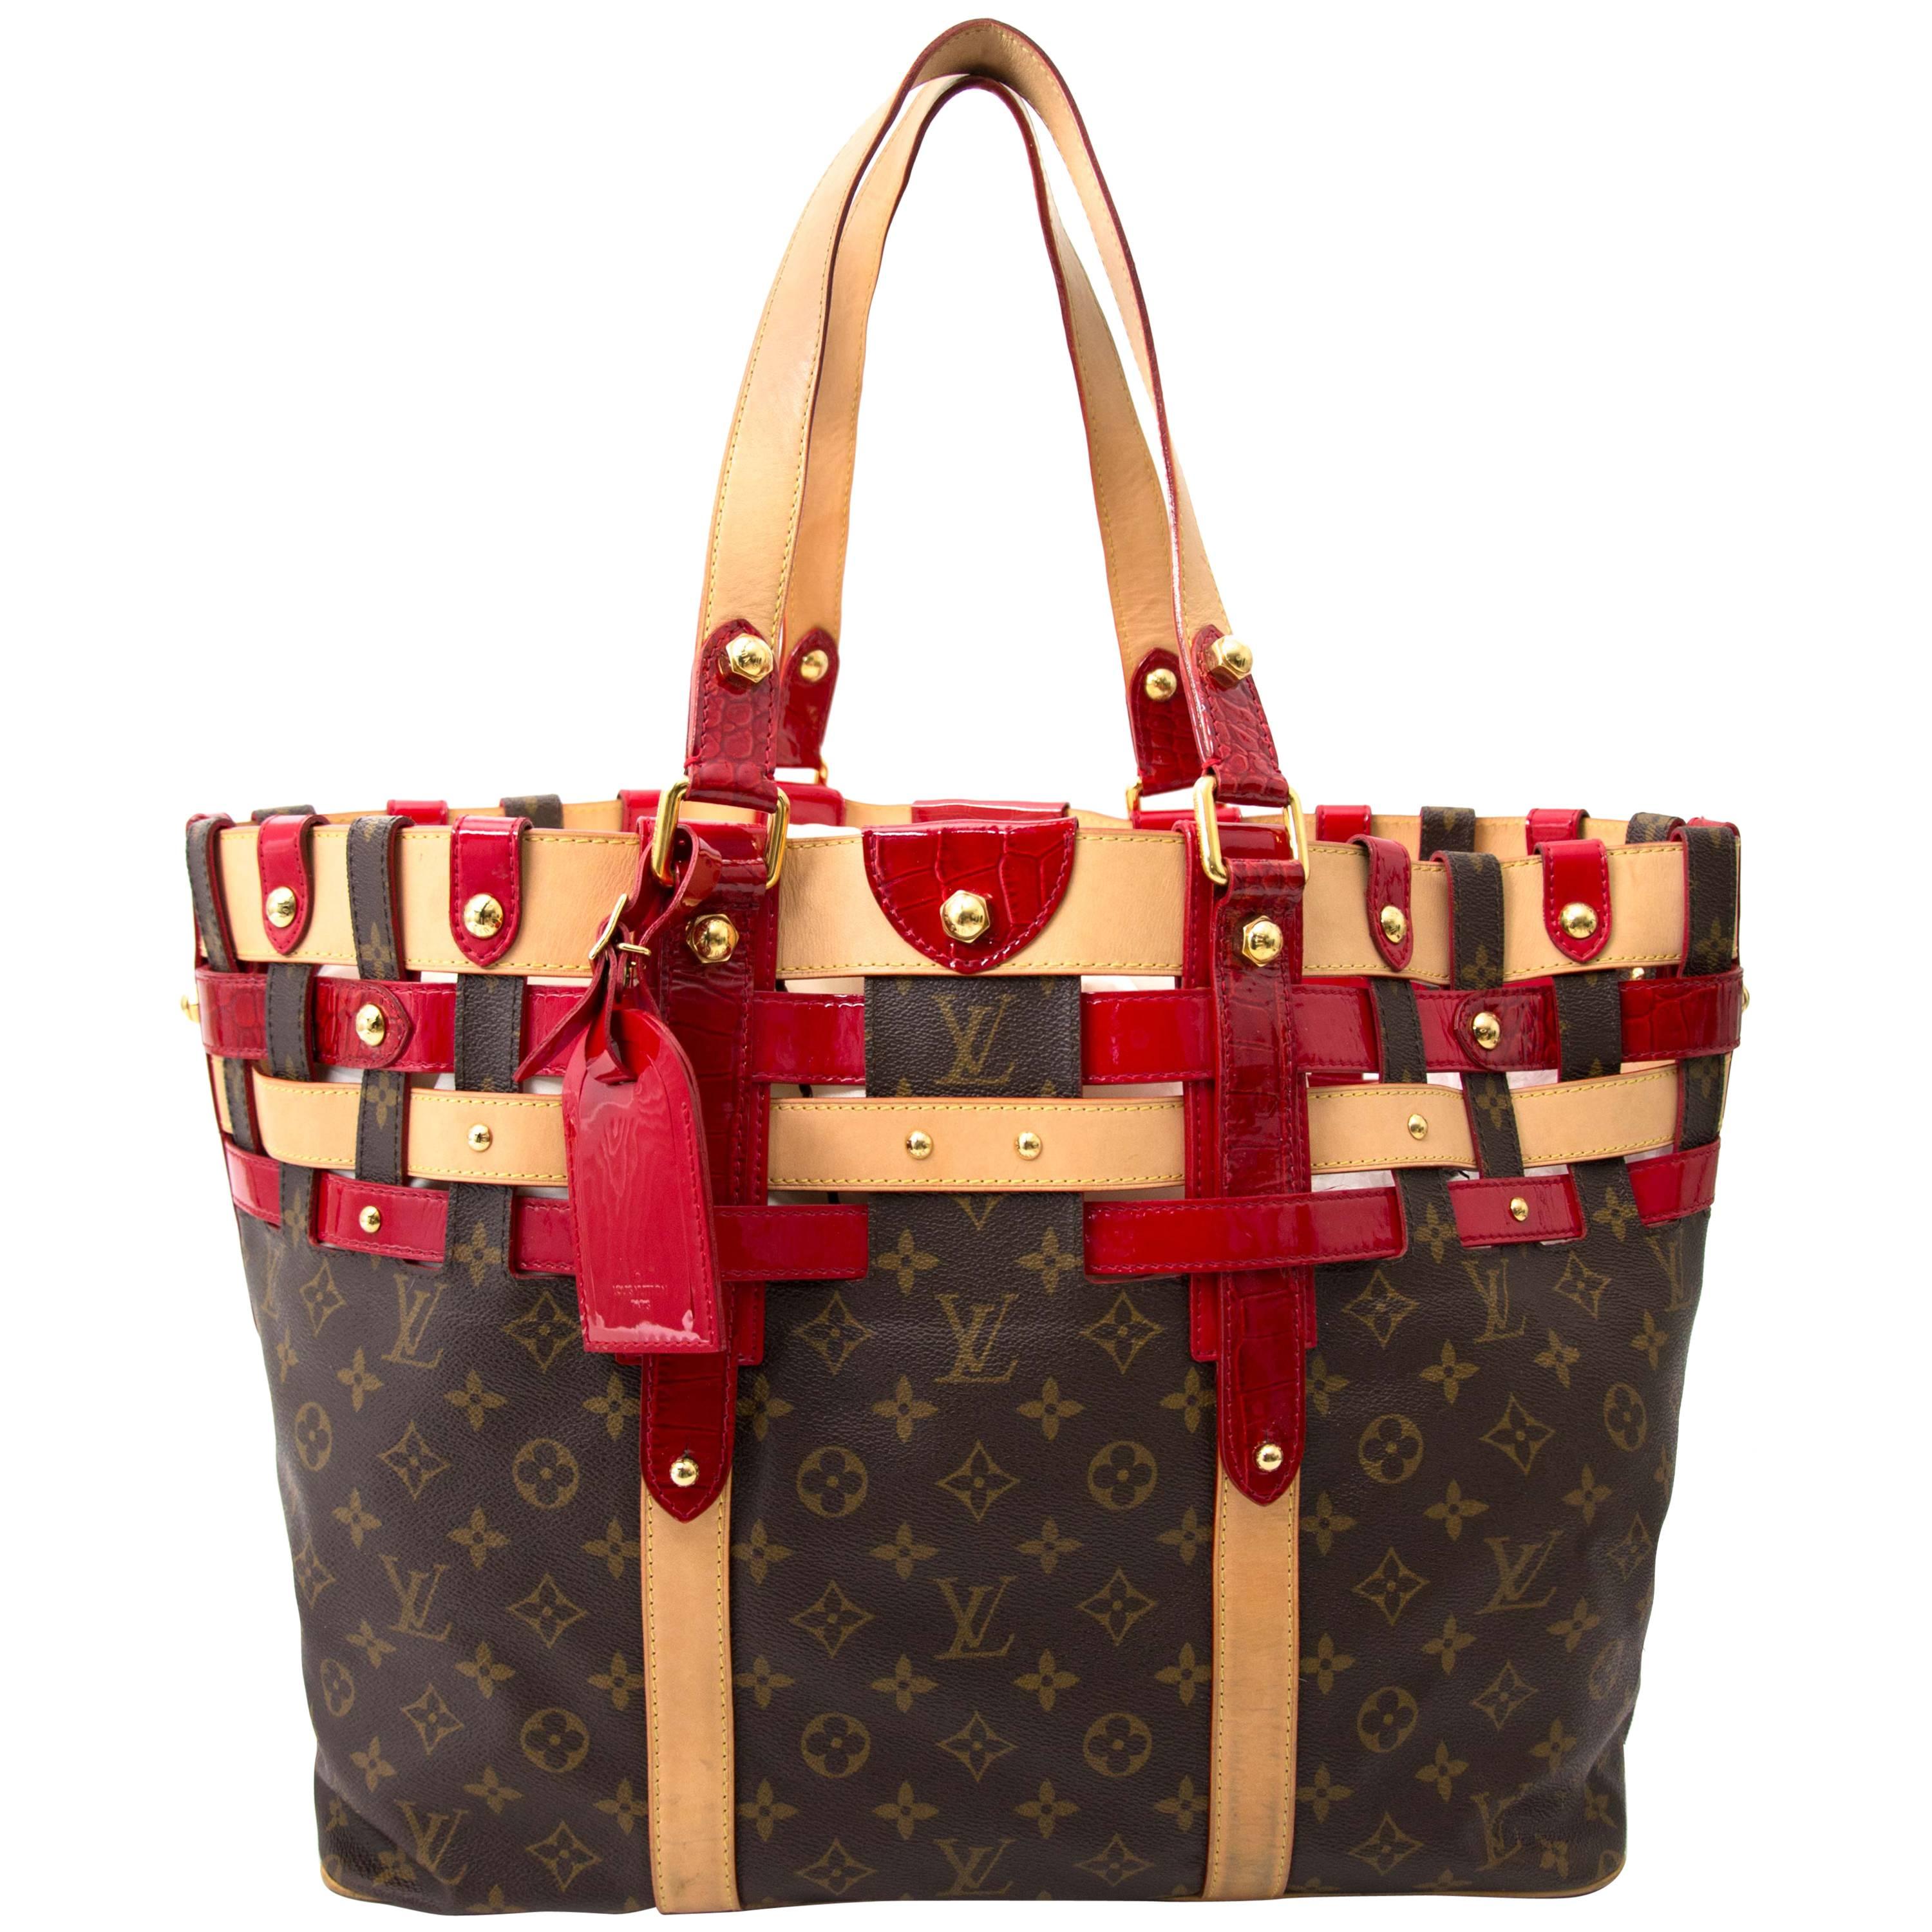 Bags by Louis Vuitton: Ruby Tube Handbag by Louis Vuitton